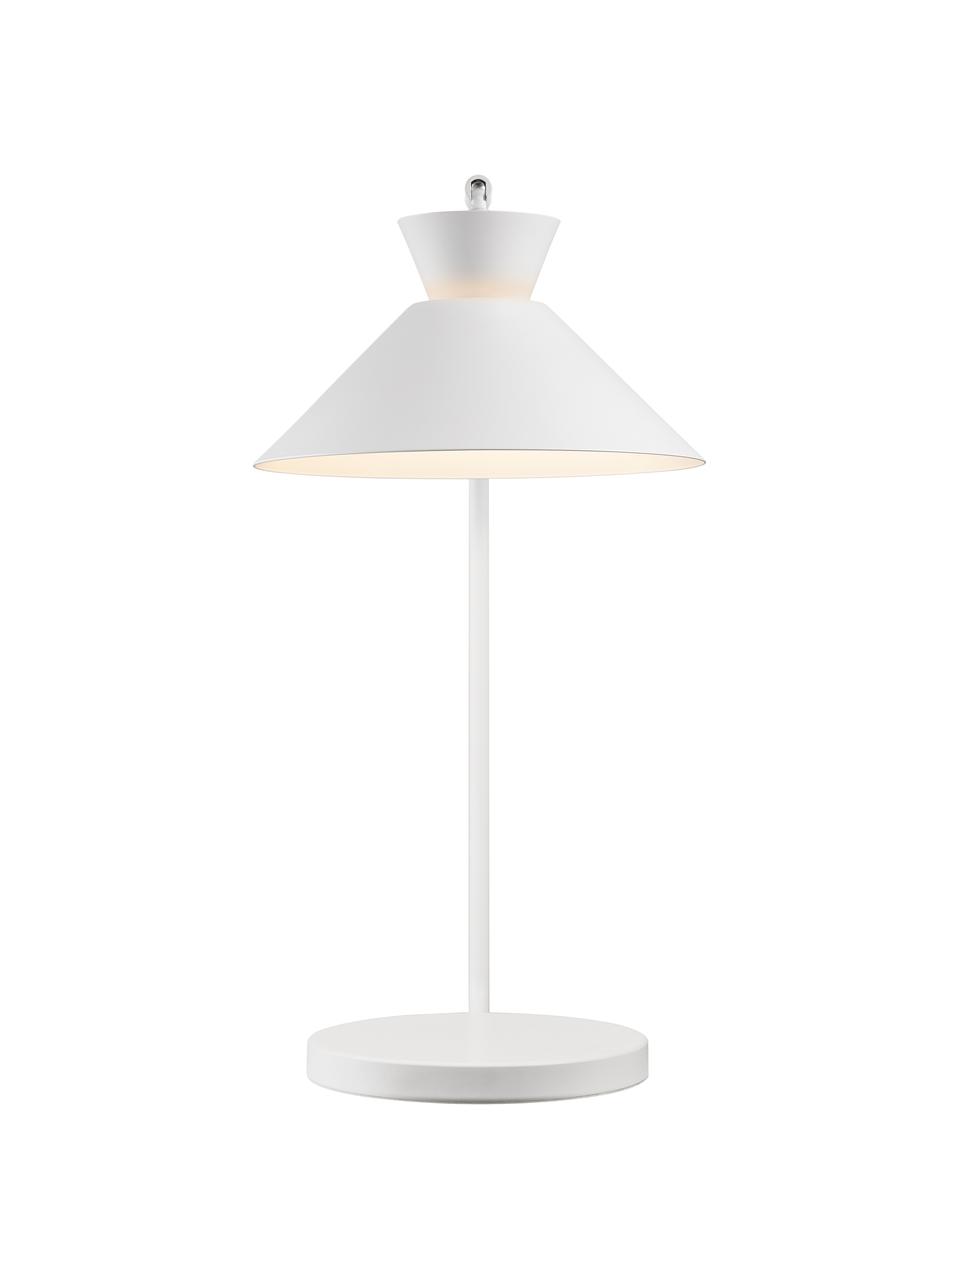 Grote bureaulamp Dial, Lampenkap: gecoat metaal, Wit, Ø 25 x H 51 cm